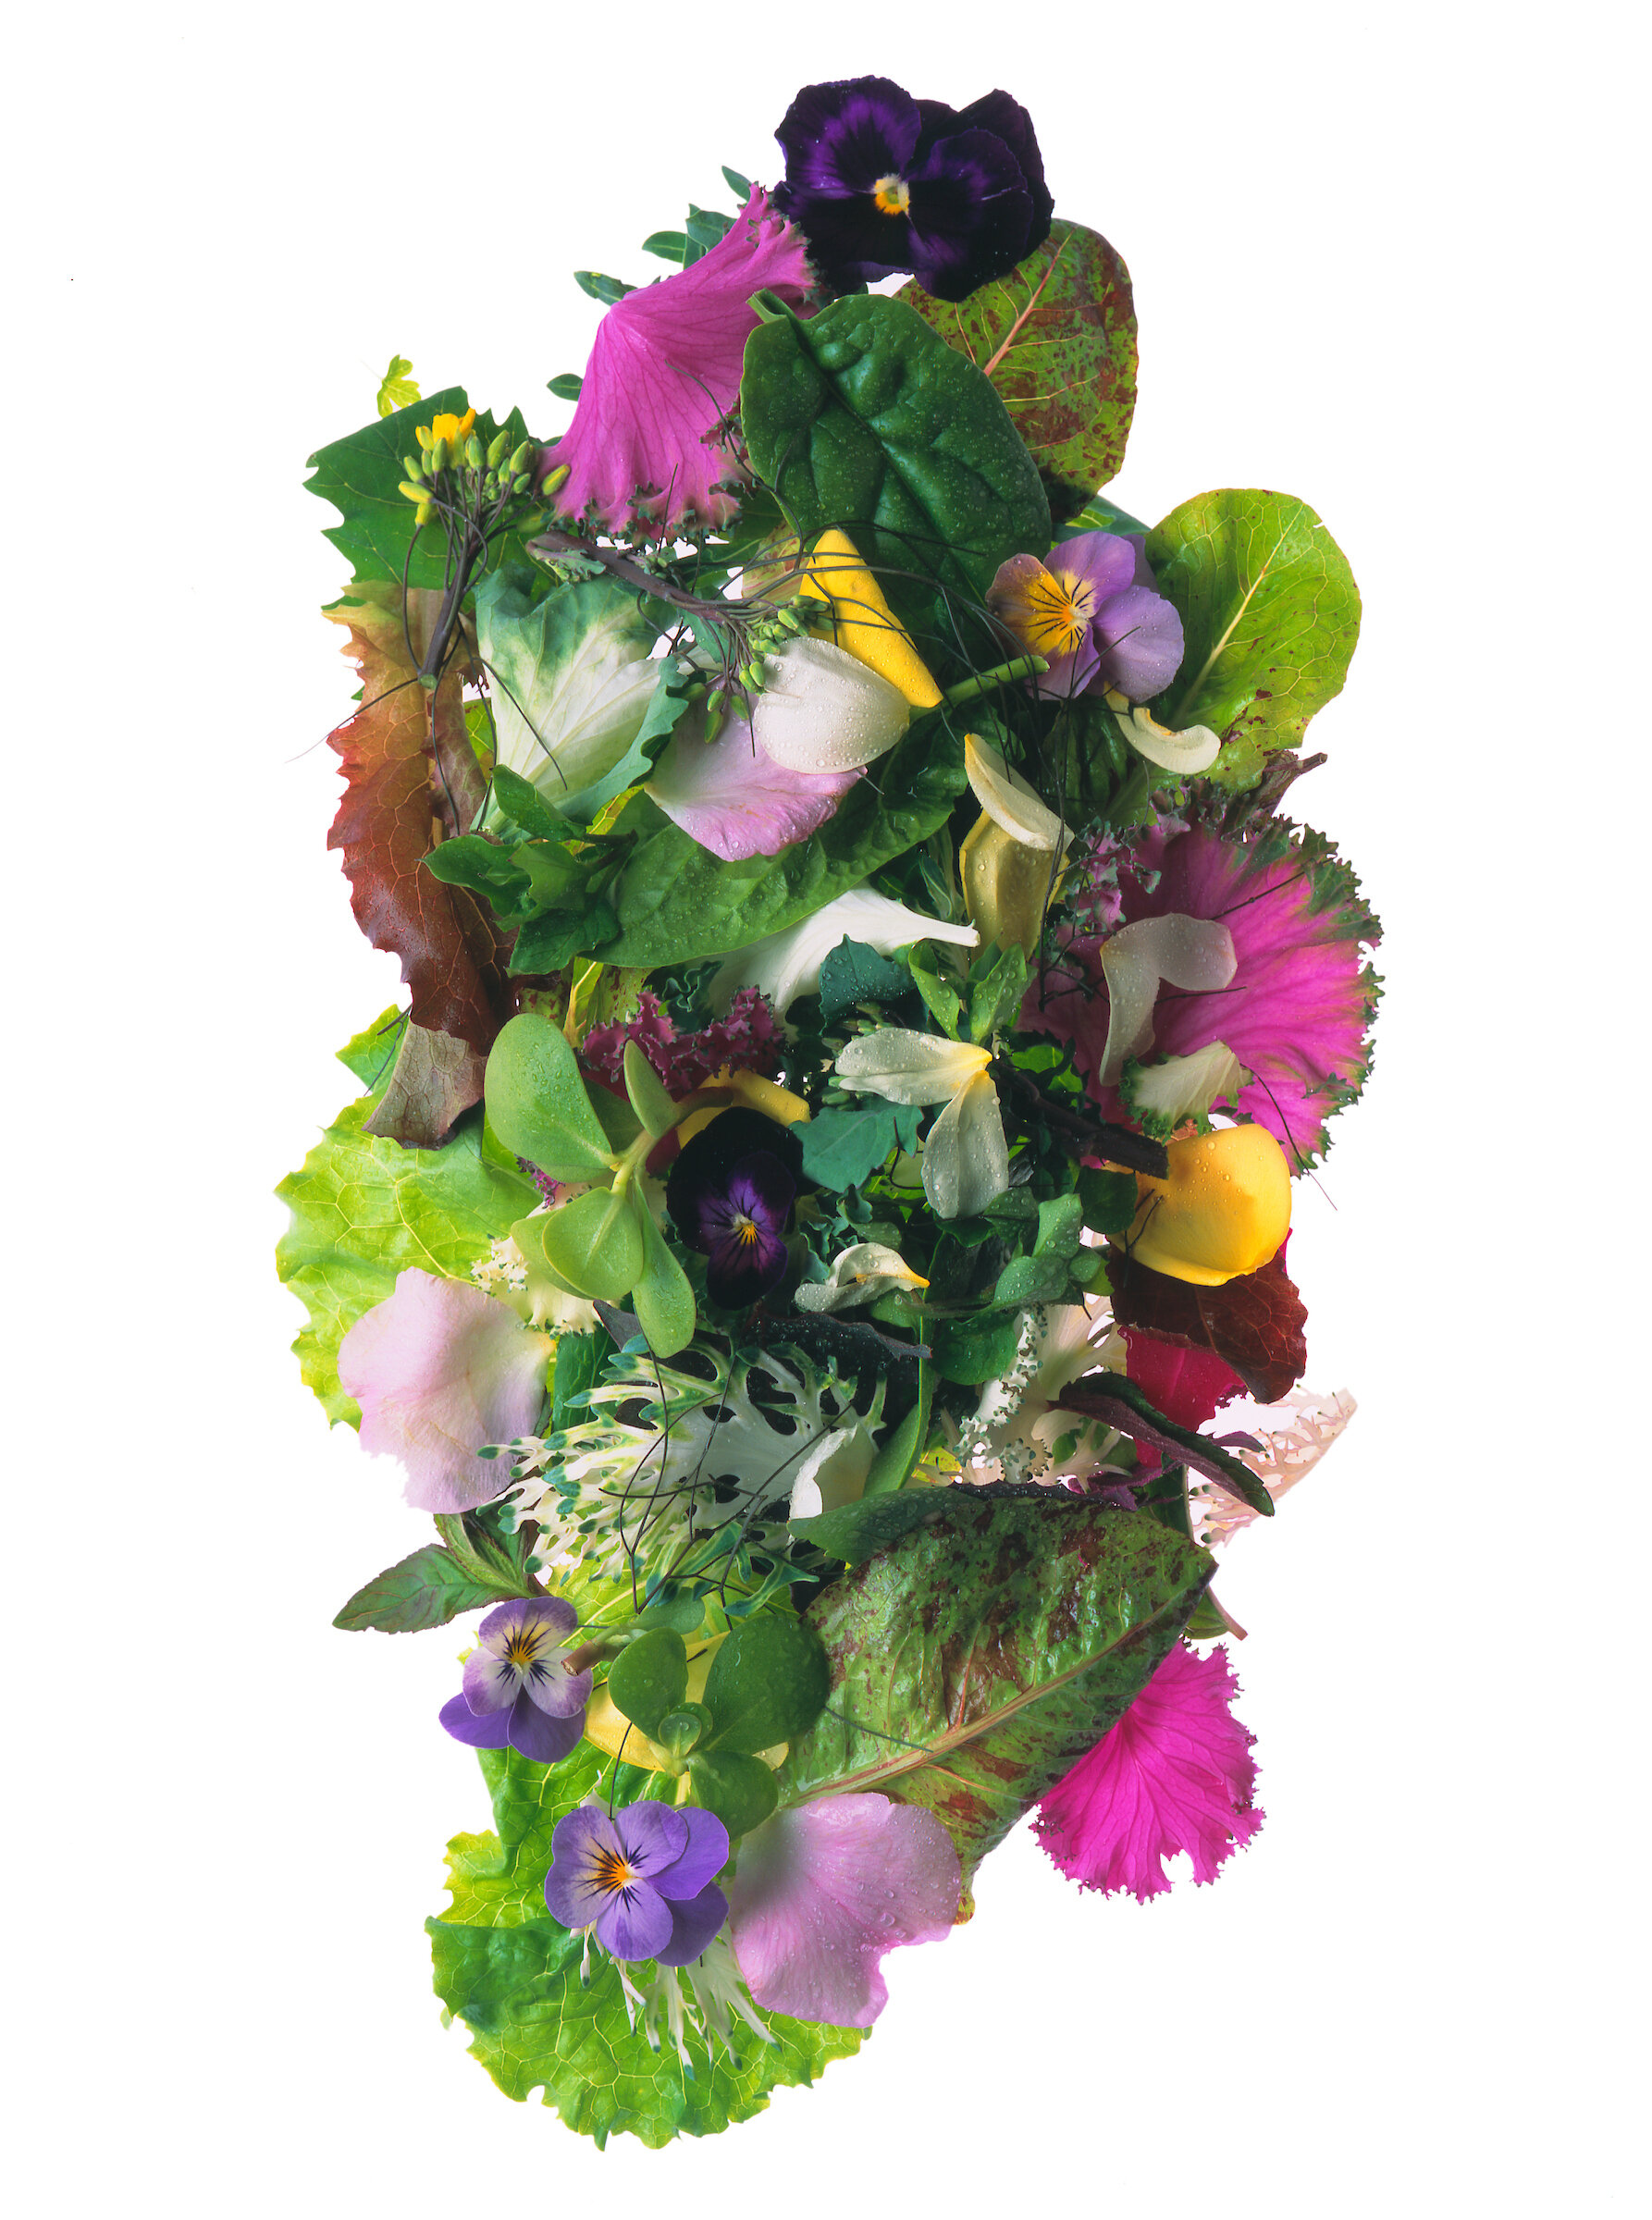 Salad with edible flowers 01.jpg